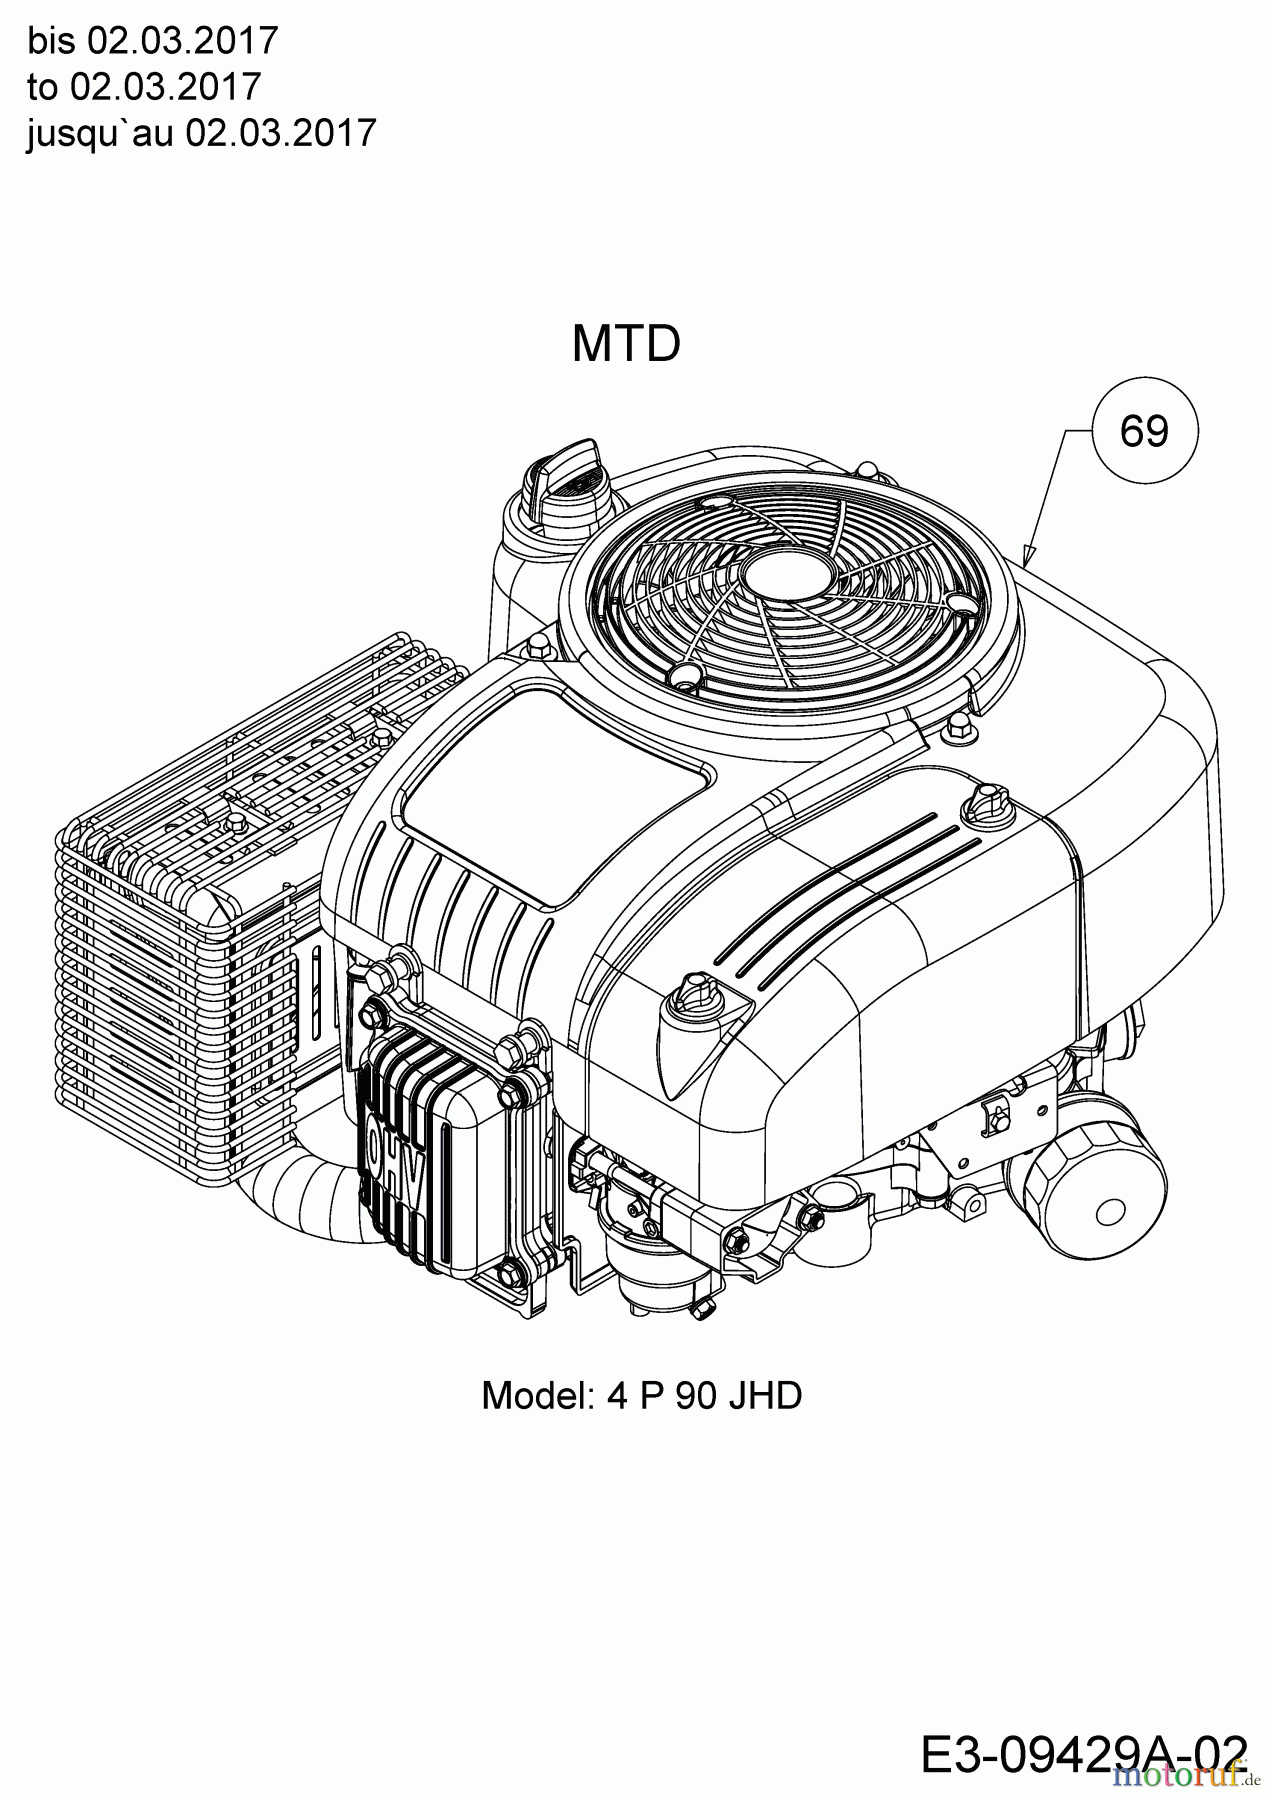  MTD Motormäher mit Antrieb WCM 84 E 12AE76SM678  (2018) Motor MTD bis 02.03.2017